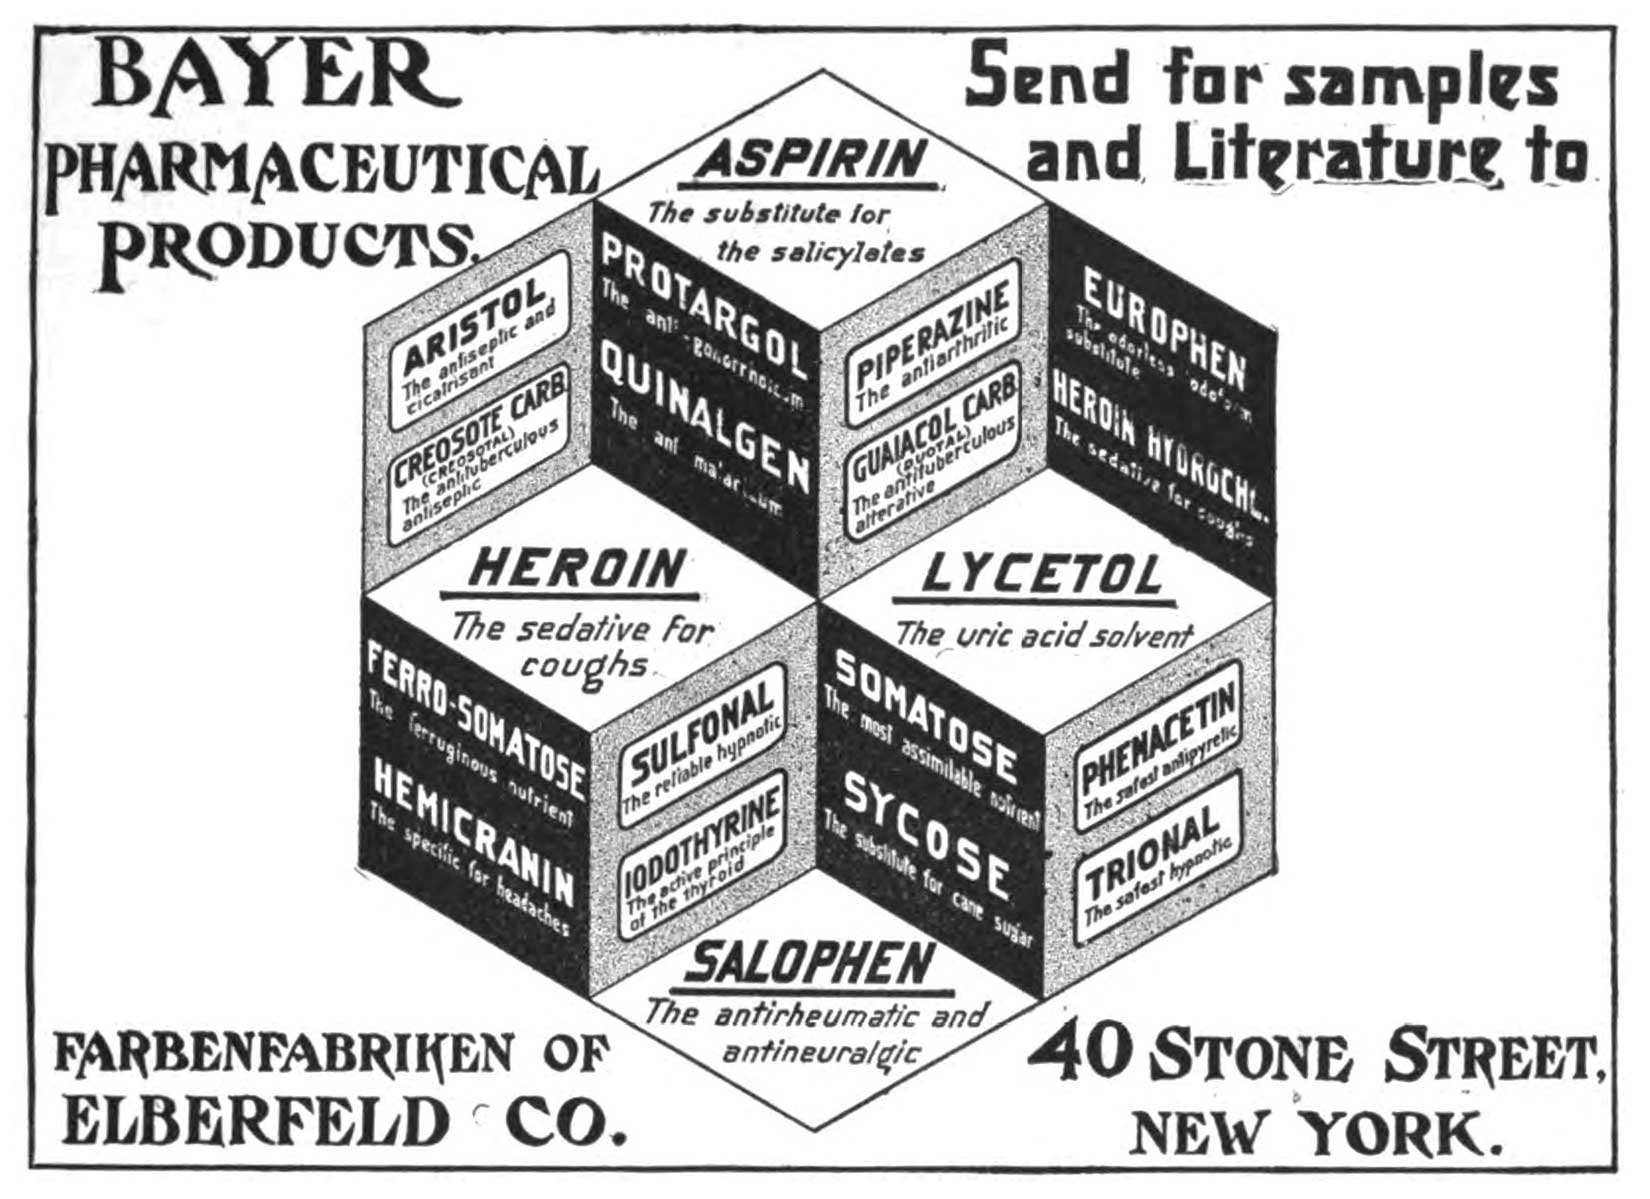 Bayer-Pharmaceutical-Heroin-advertisement